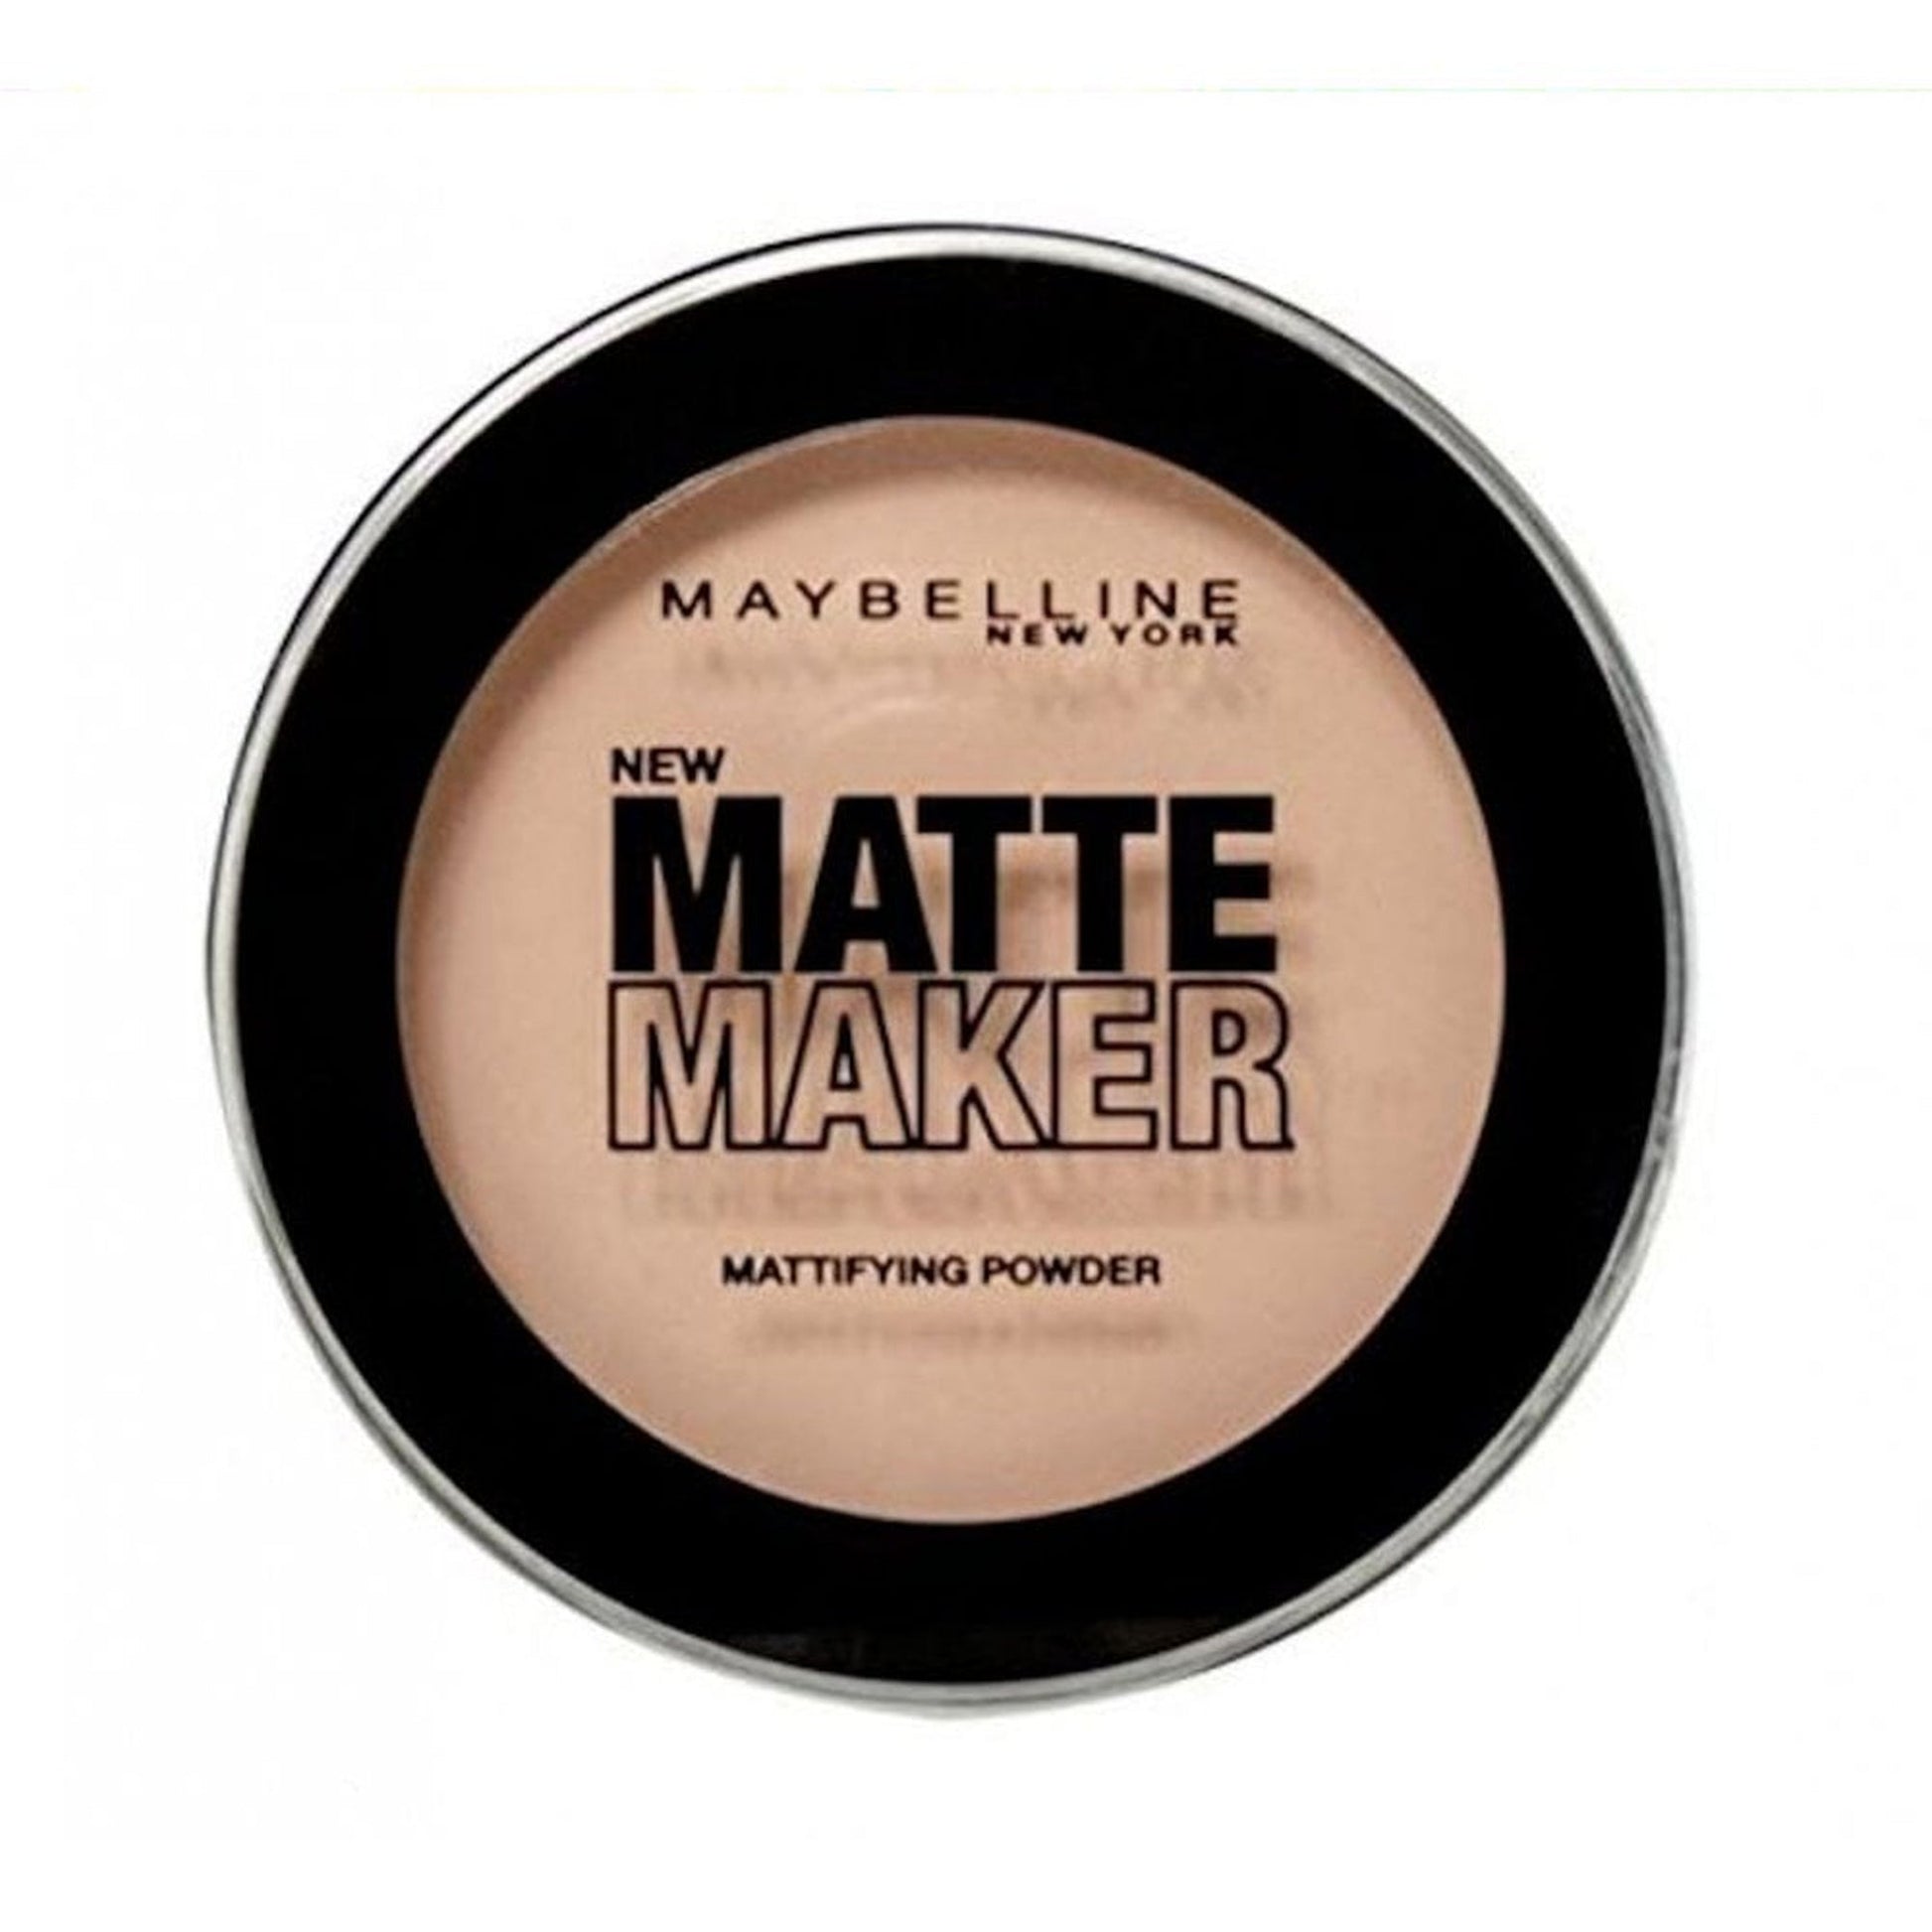 Maybelline Matte Maker Mattifying Powder 30 NATURAL BEIGE-Maybelline-BeautyNmakeup.co.uk